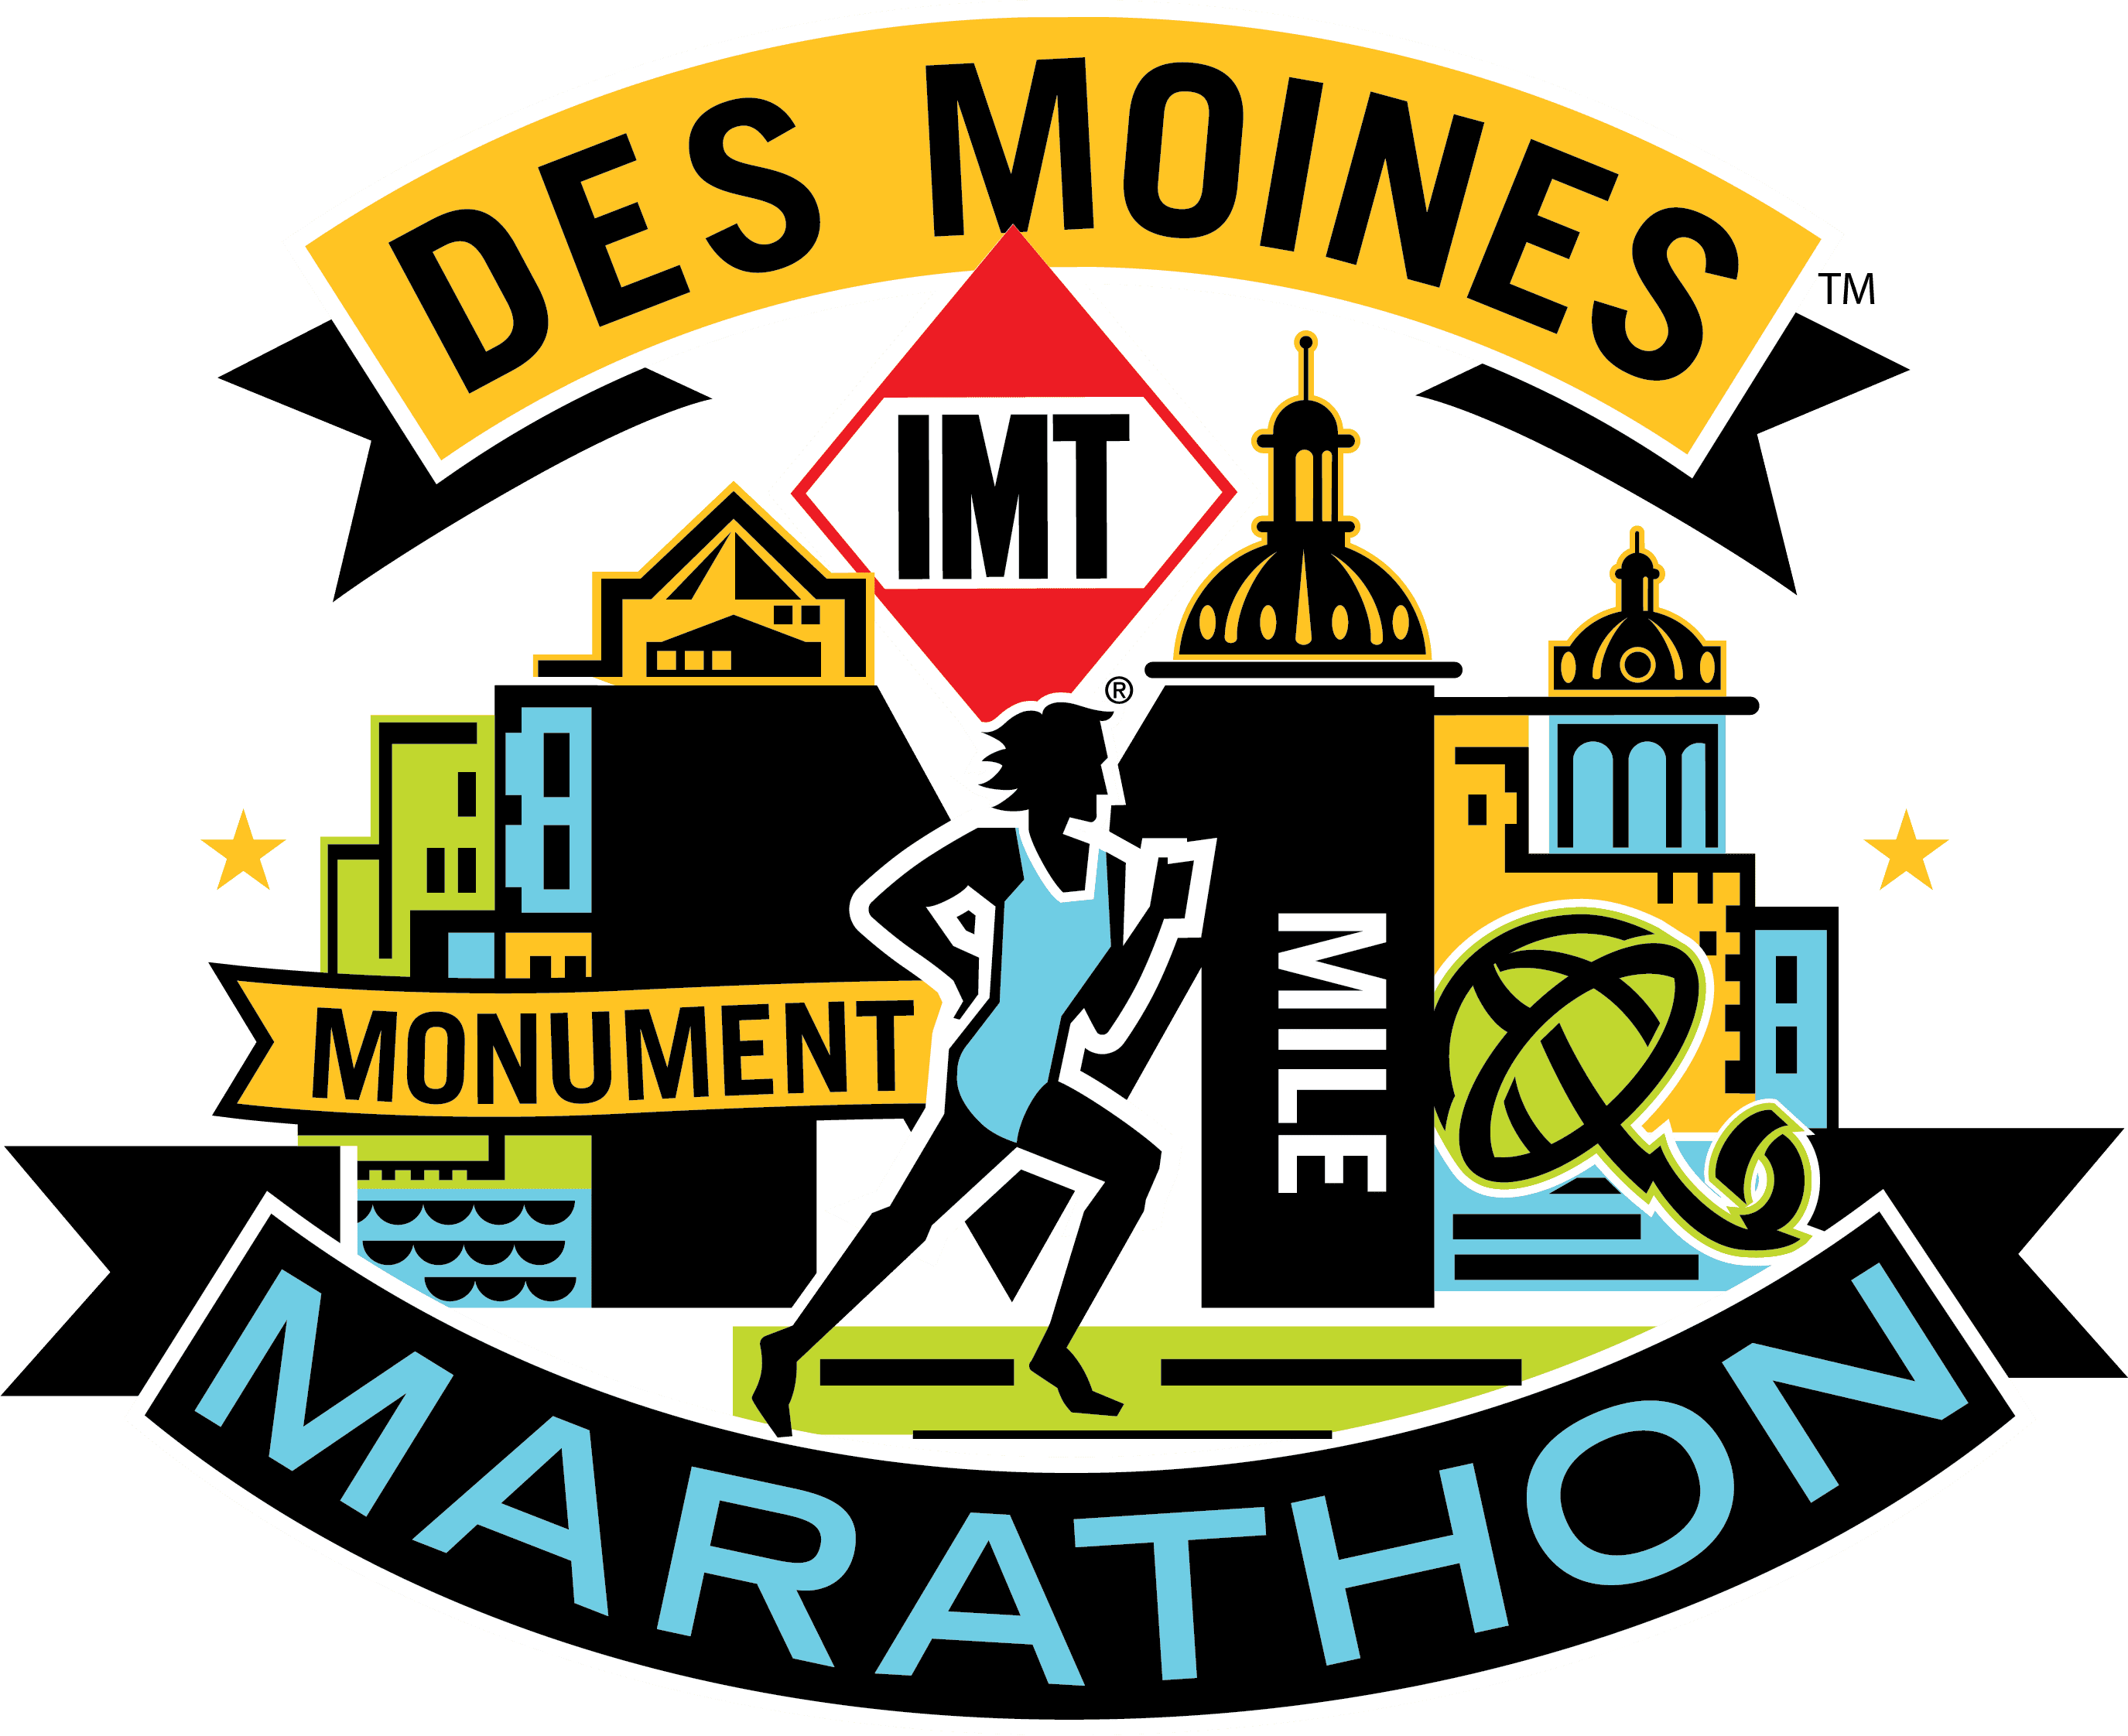 IMT Des Moines Monument Mile logo on RaceRaves